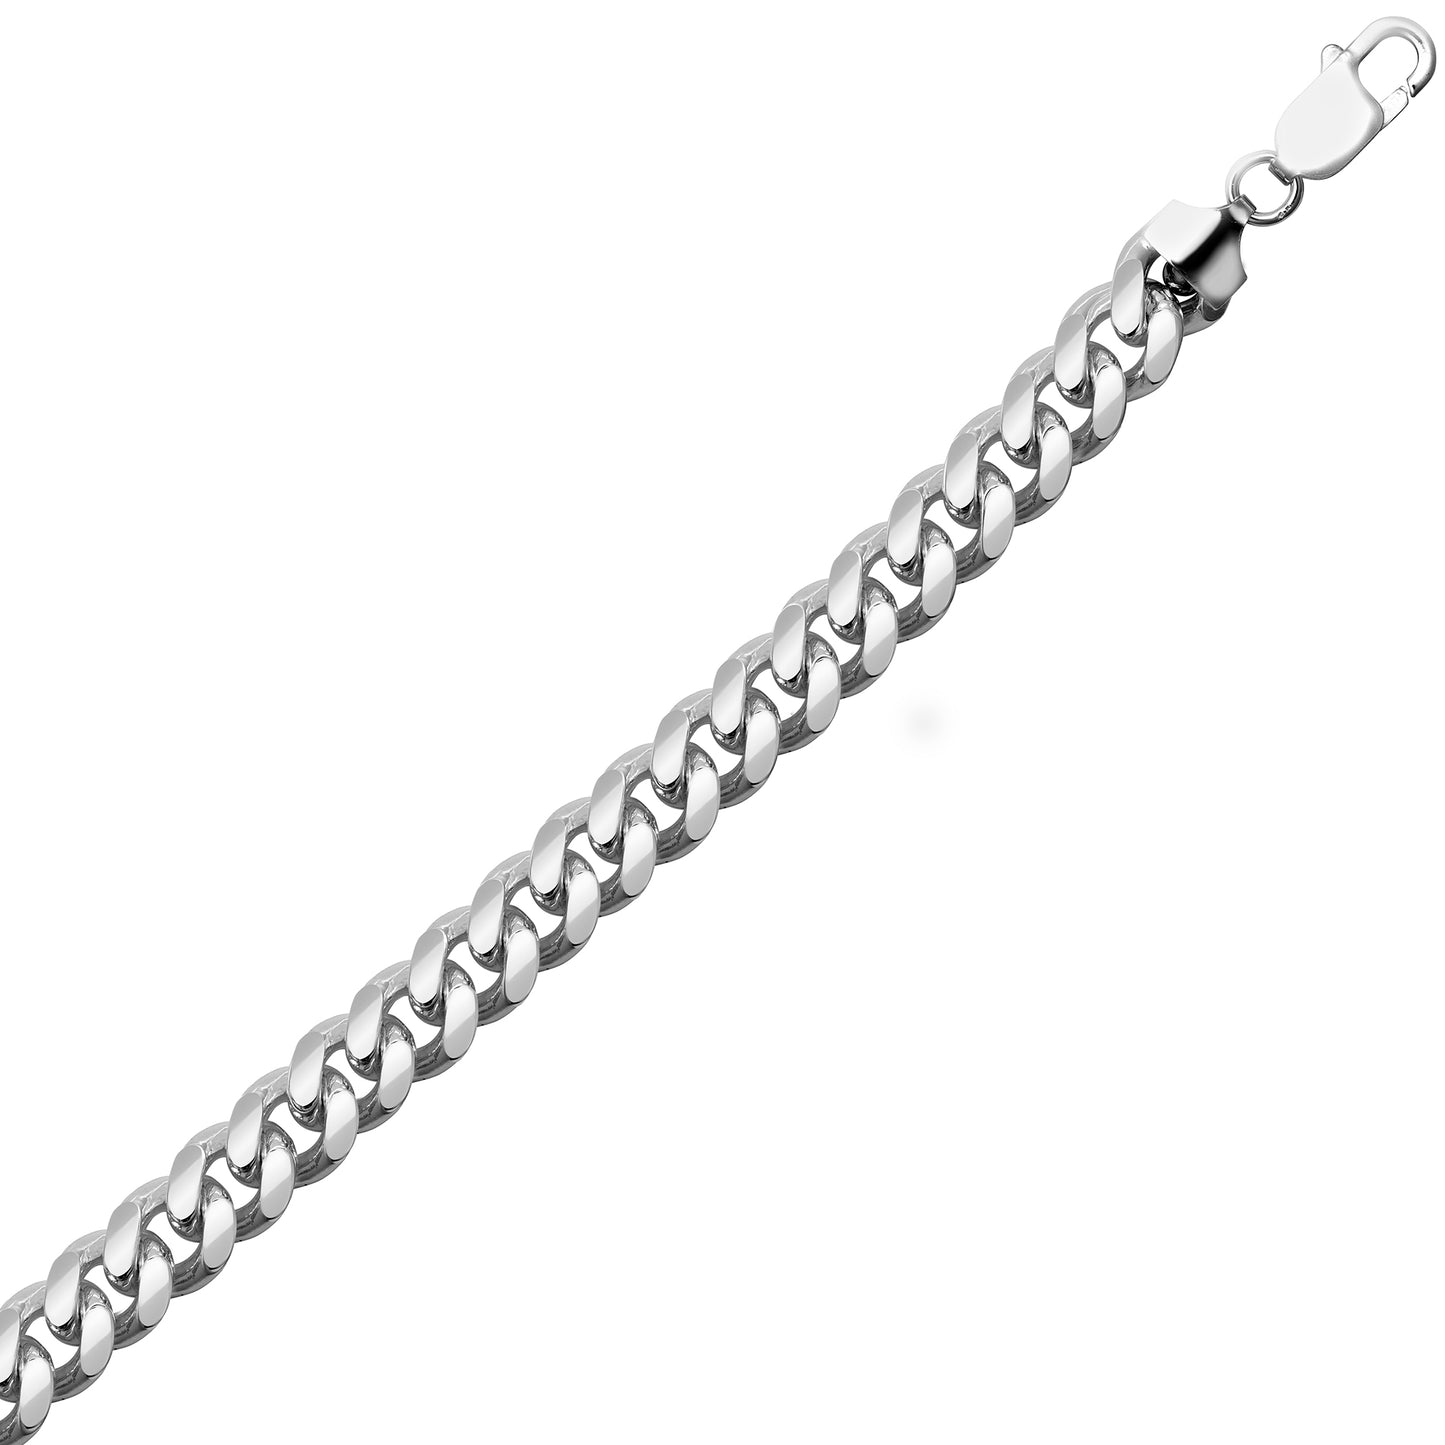 Mens Silver  Domed Curb Cuban 9mm Chain Bracelet 9 inch 23cm - ACN021E